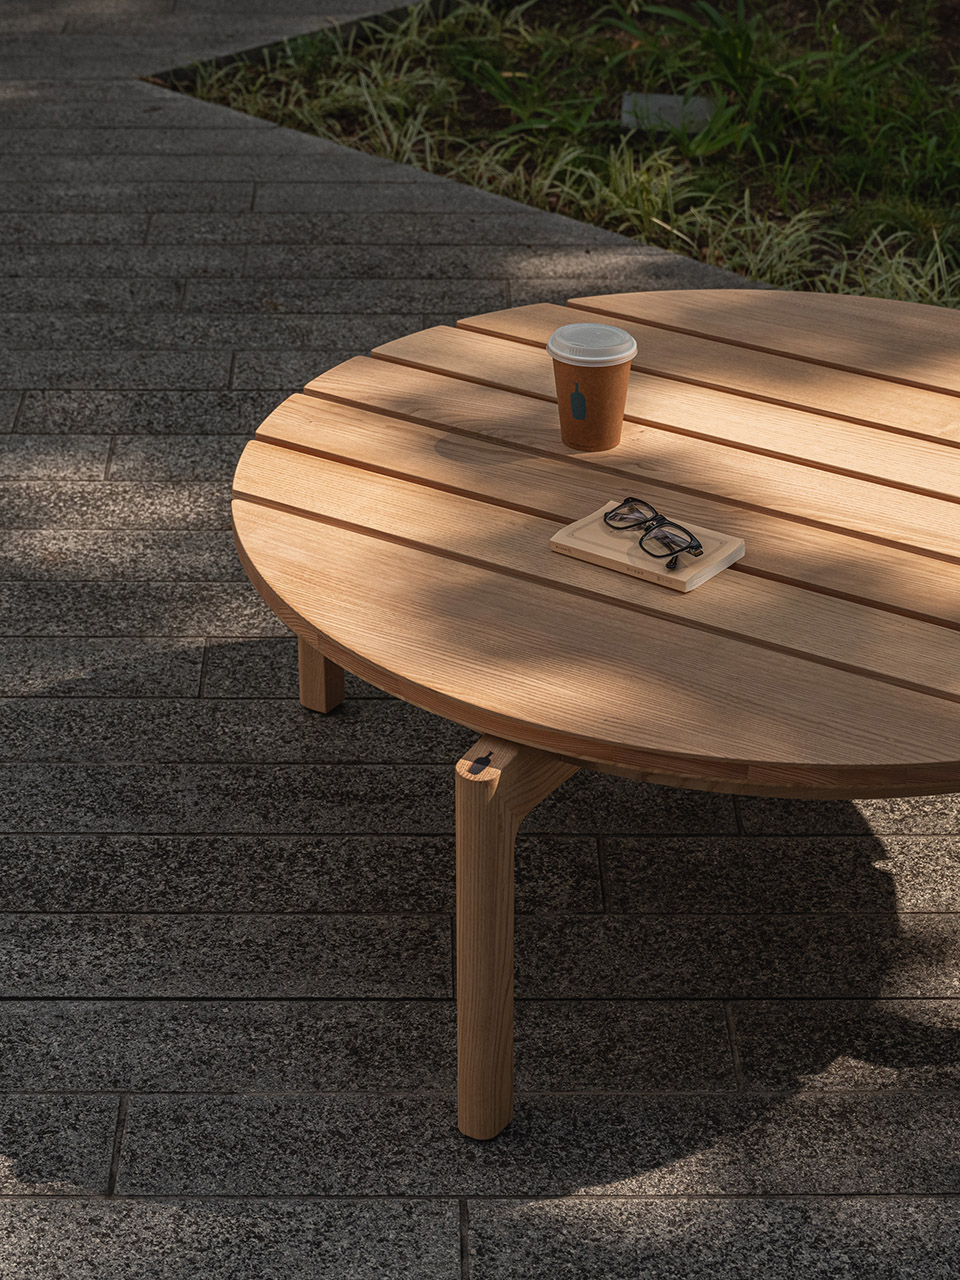 Blue Bottle咖啡港未来店，东京/科技与工艺结合的木制家具-93